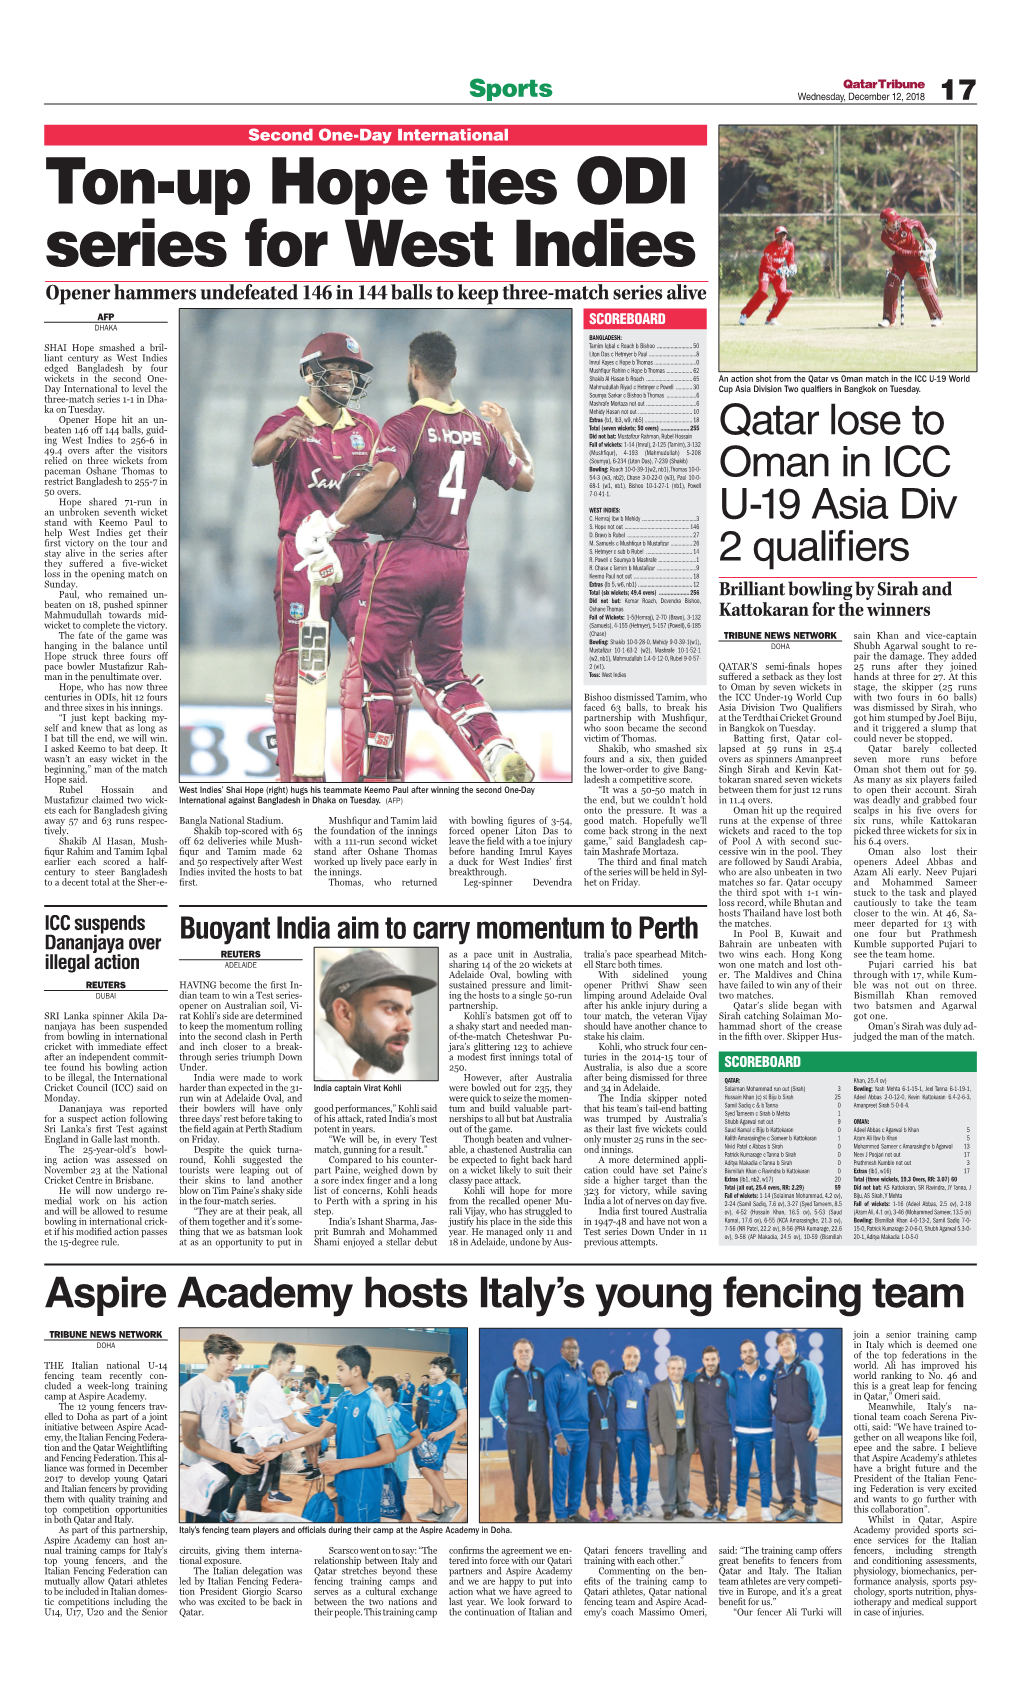 Ton-Up Hope Ties ODI Series for West Indies